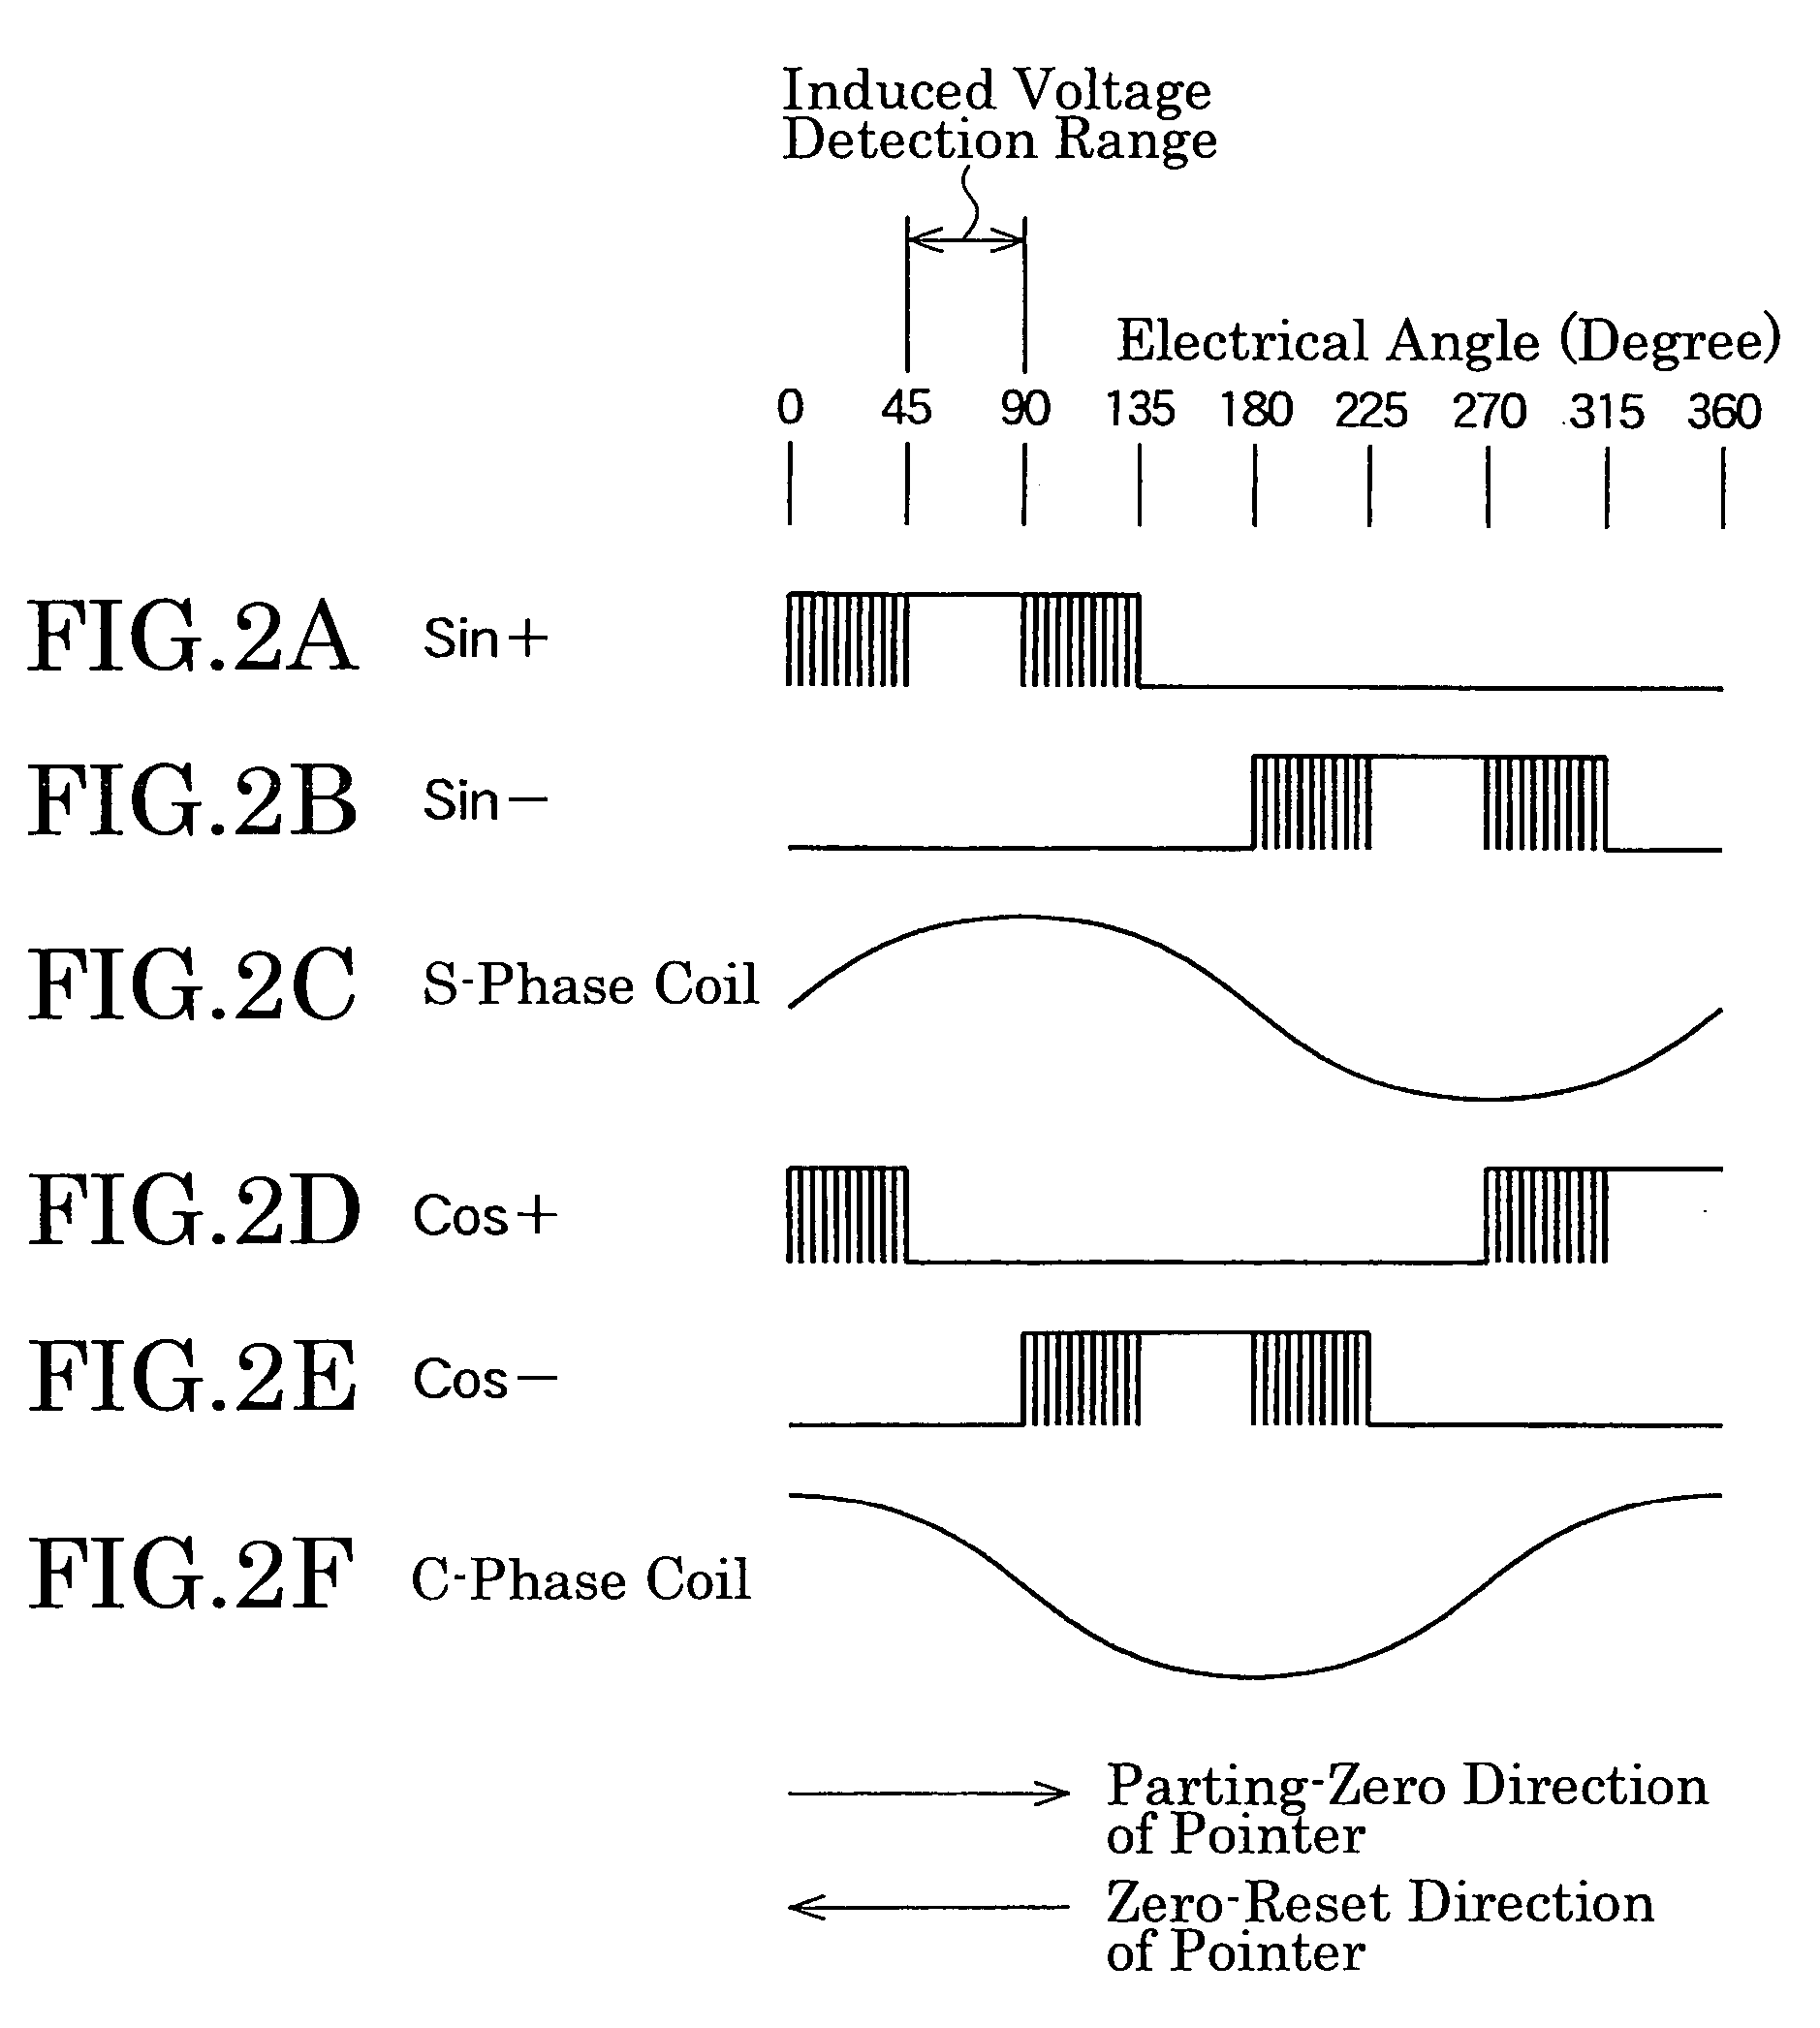 Indicating instrument